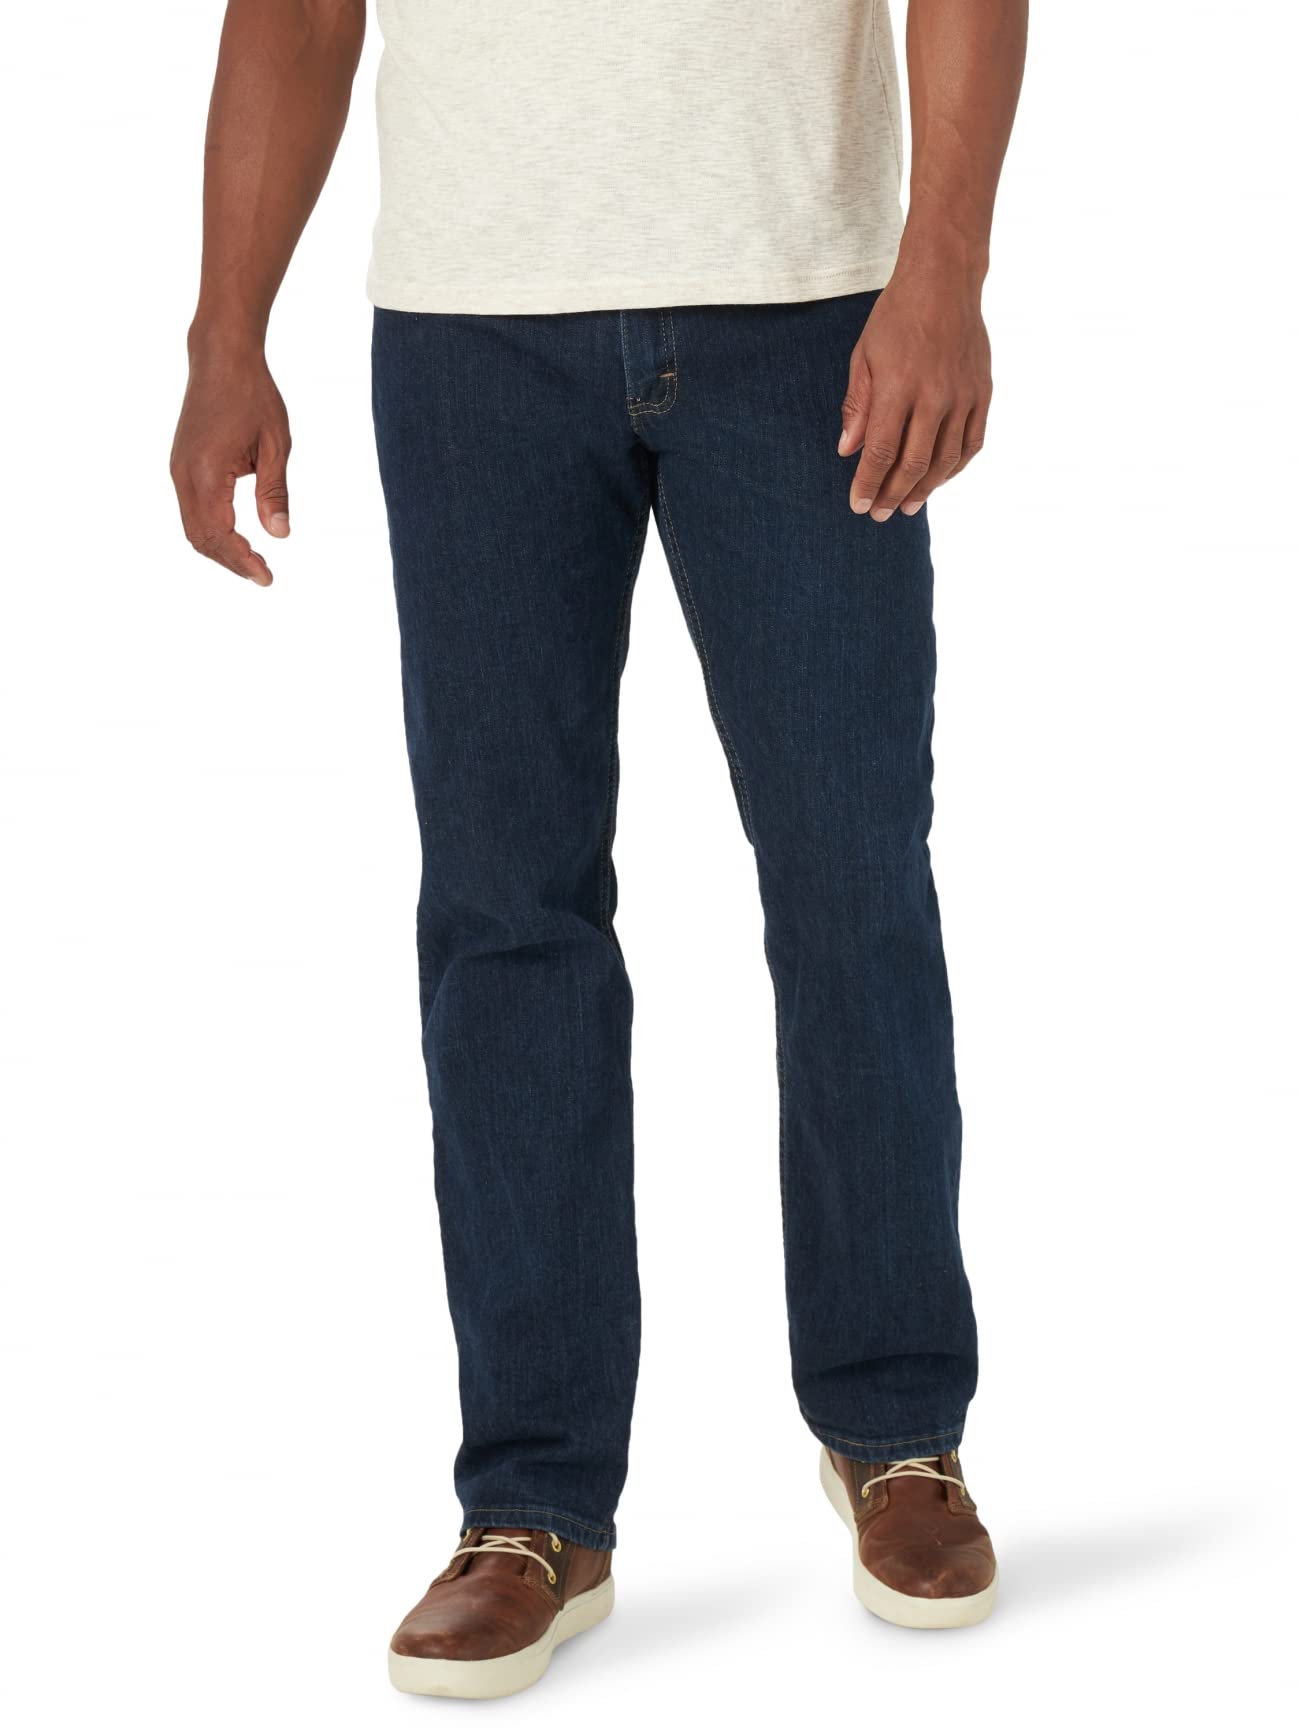 Wrangler Authentics Men's Regular Fit Comfort Flex Waist Jean, Dark Indigo, 40W x 34L